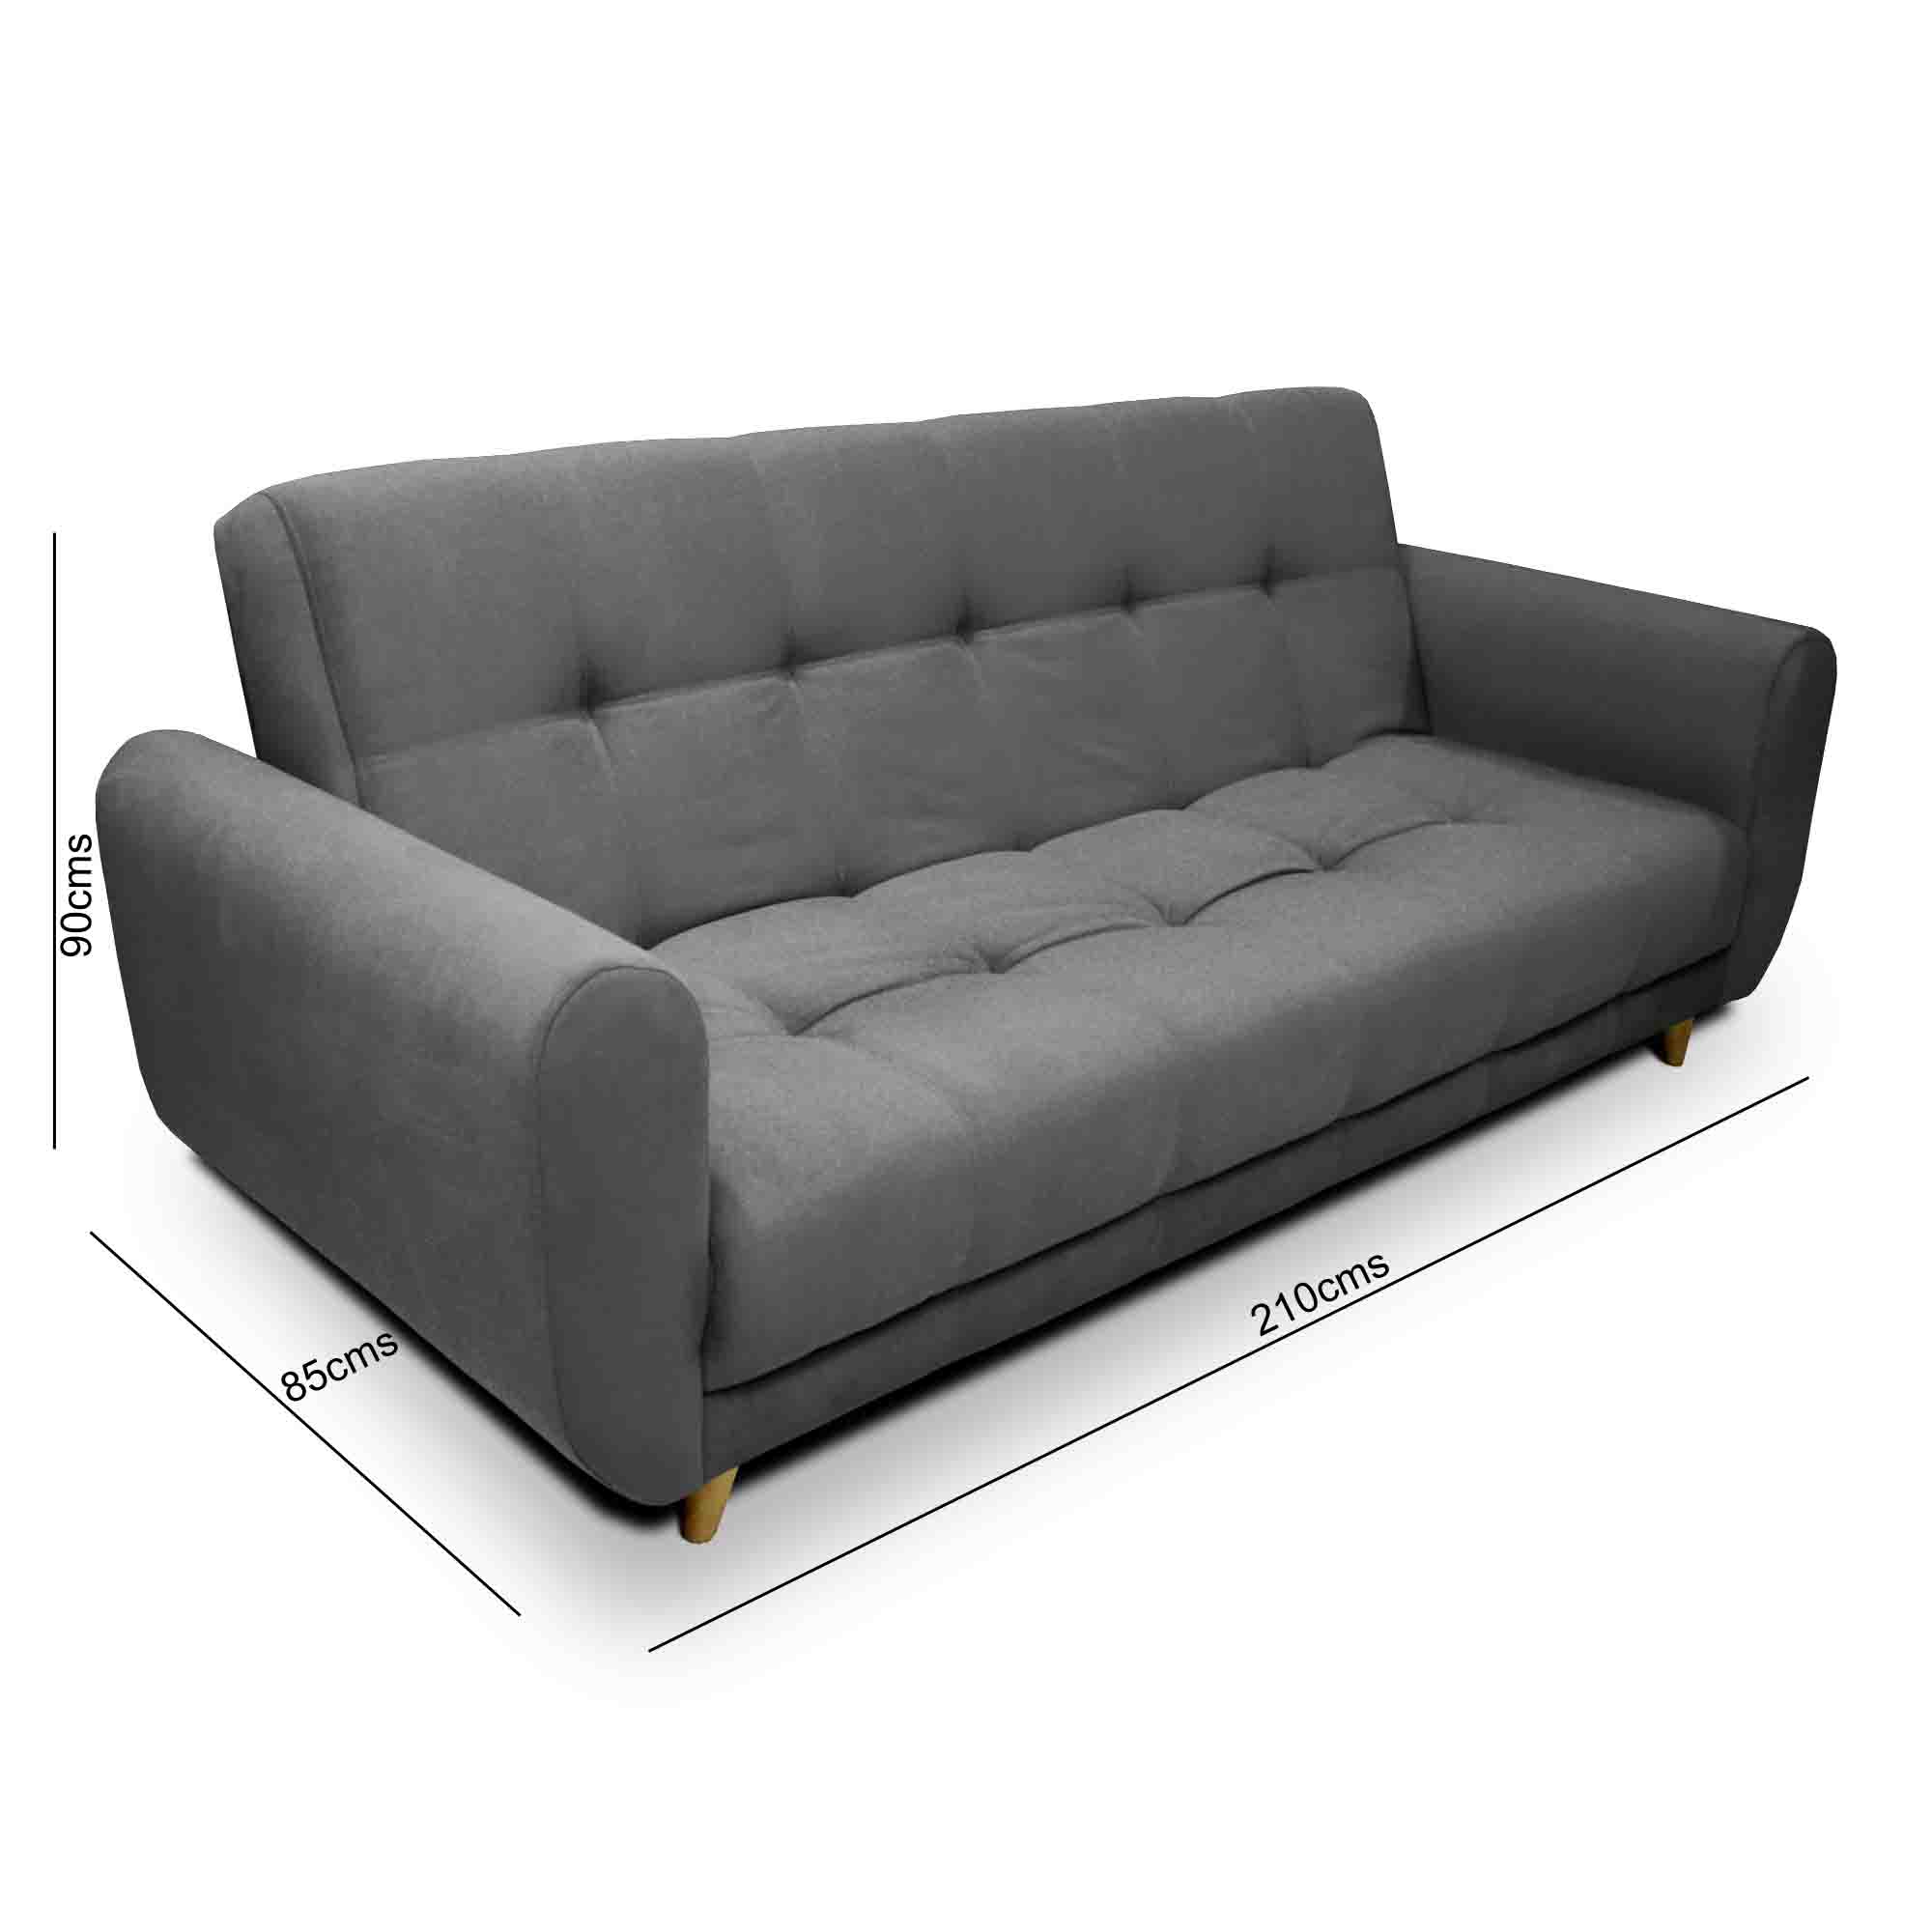 Sofa Cama Comfort Sistema Clic Clac Color Gris (2)